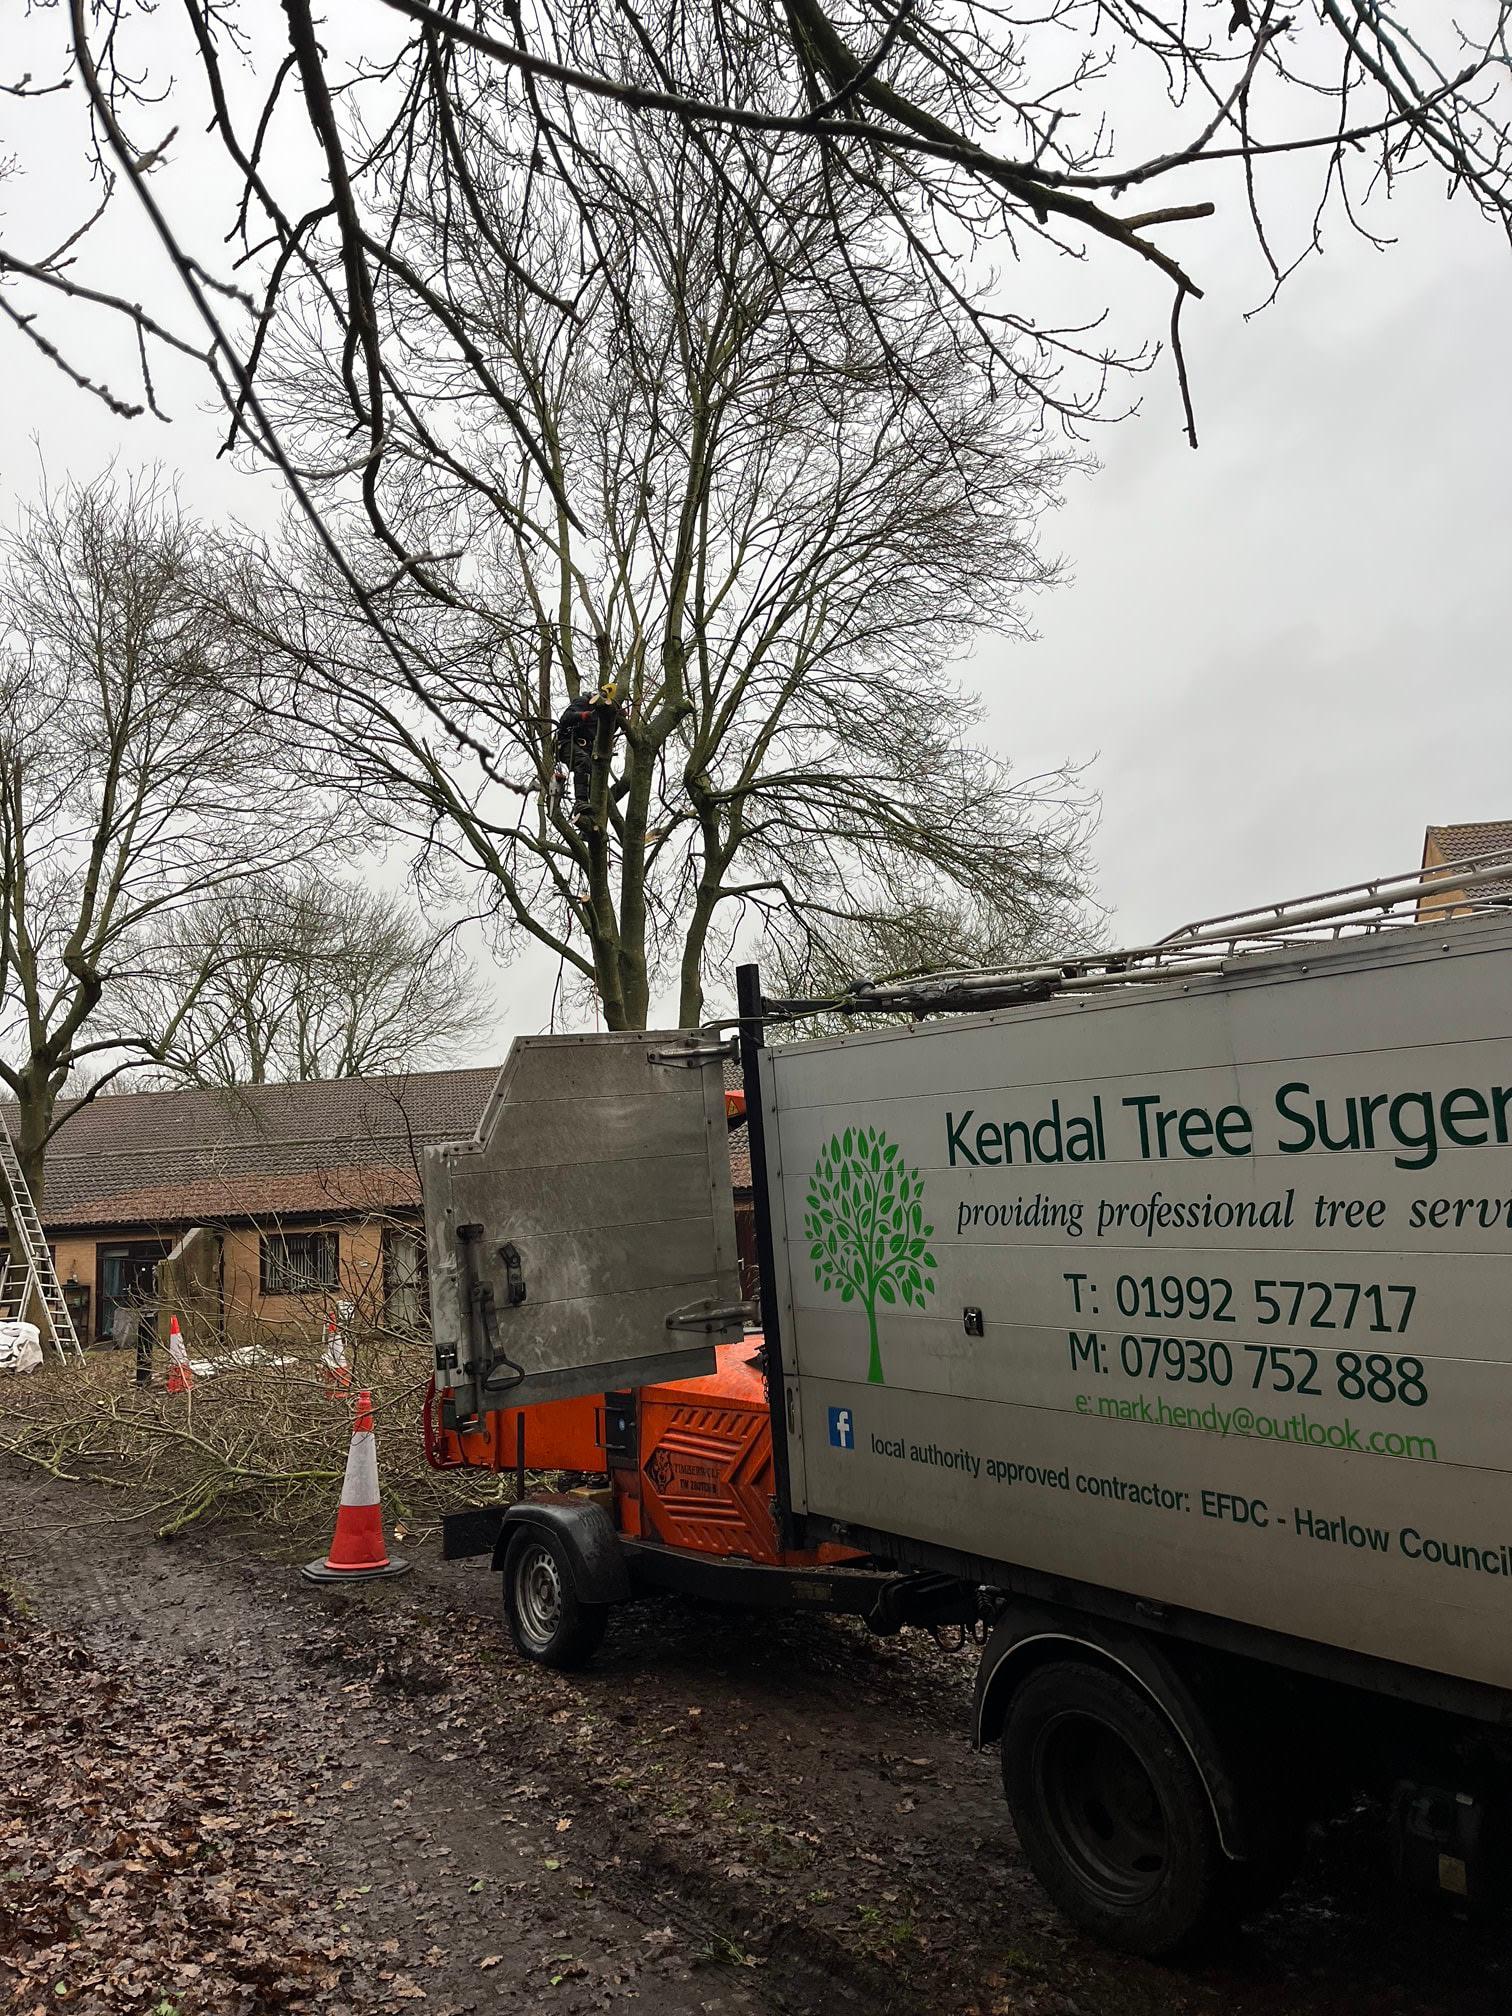 Images Kendal Tree Surgery Ltd